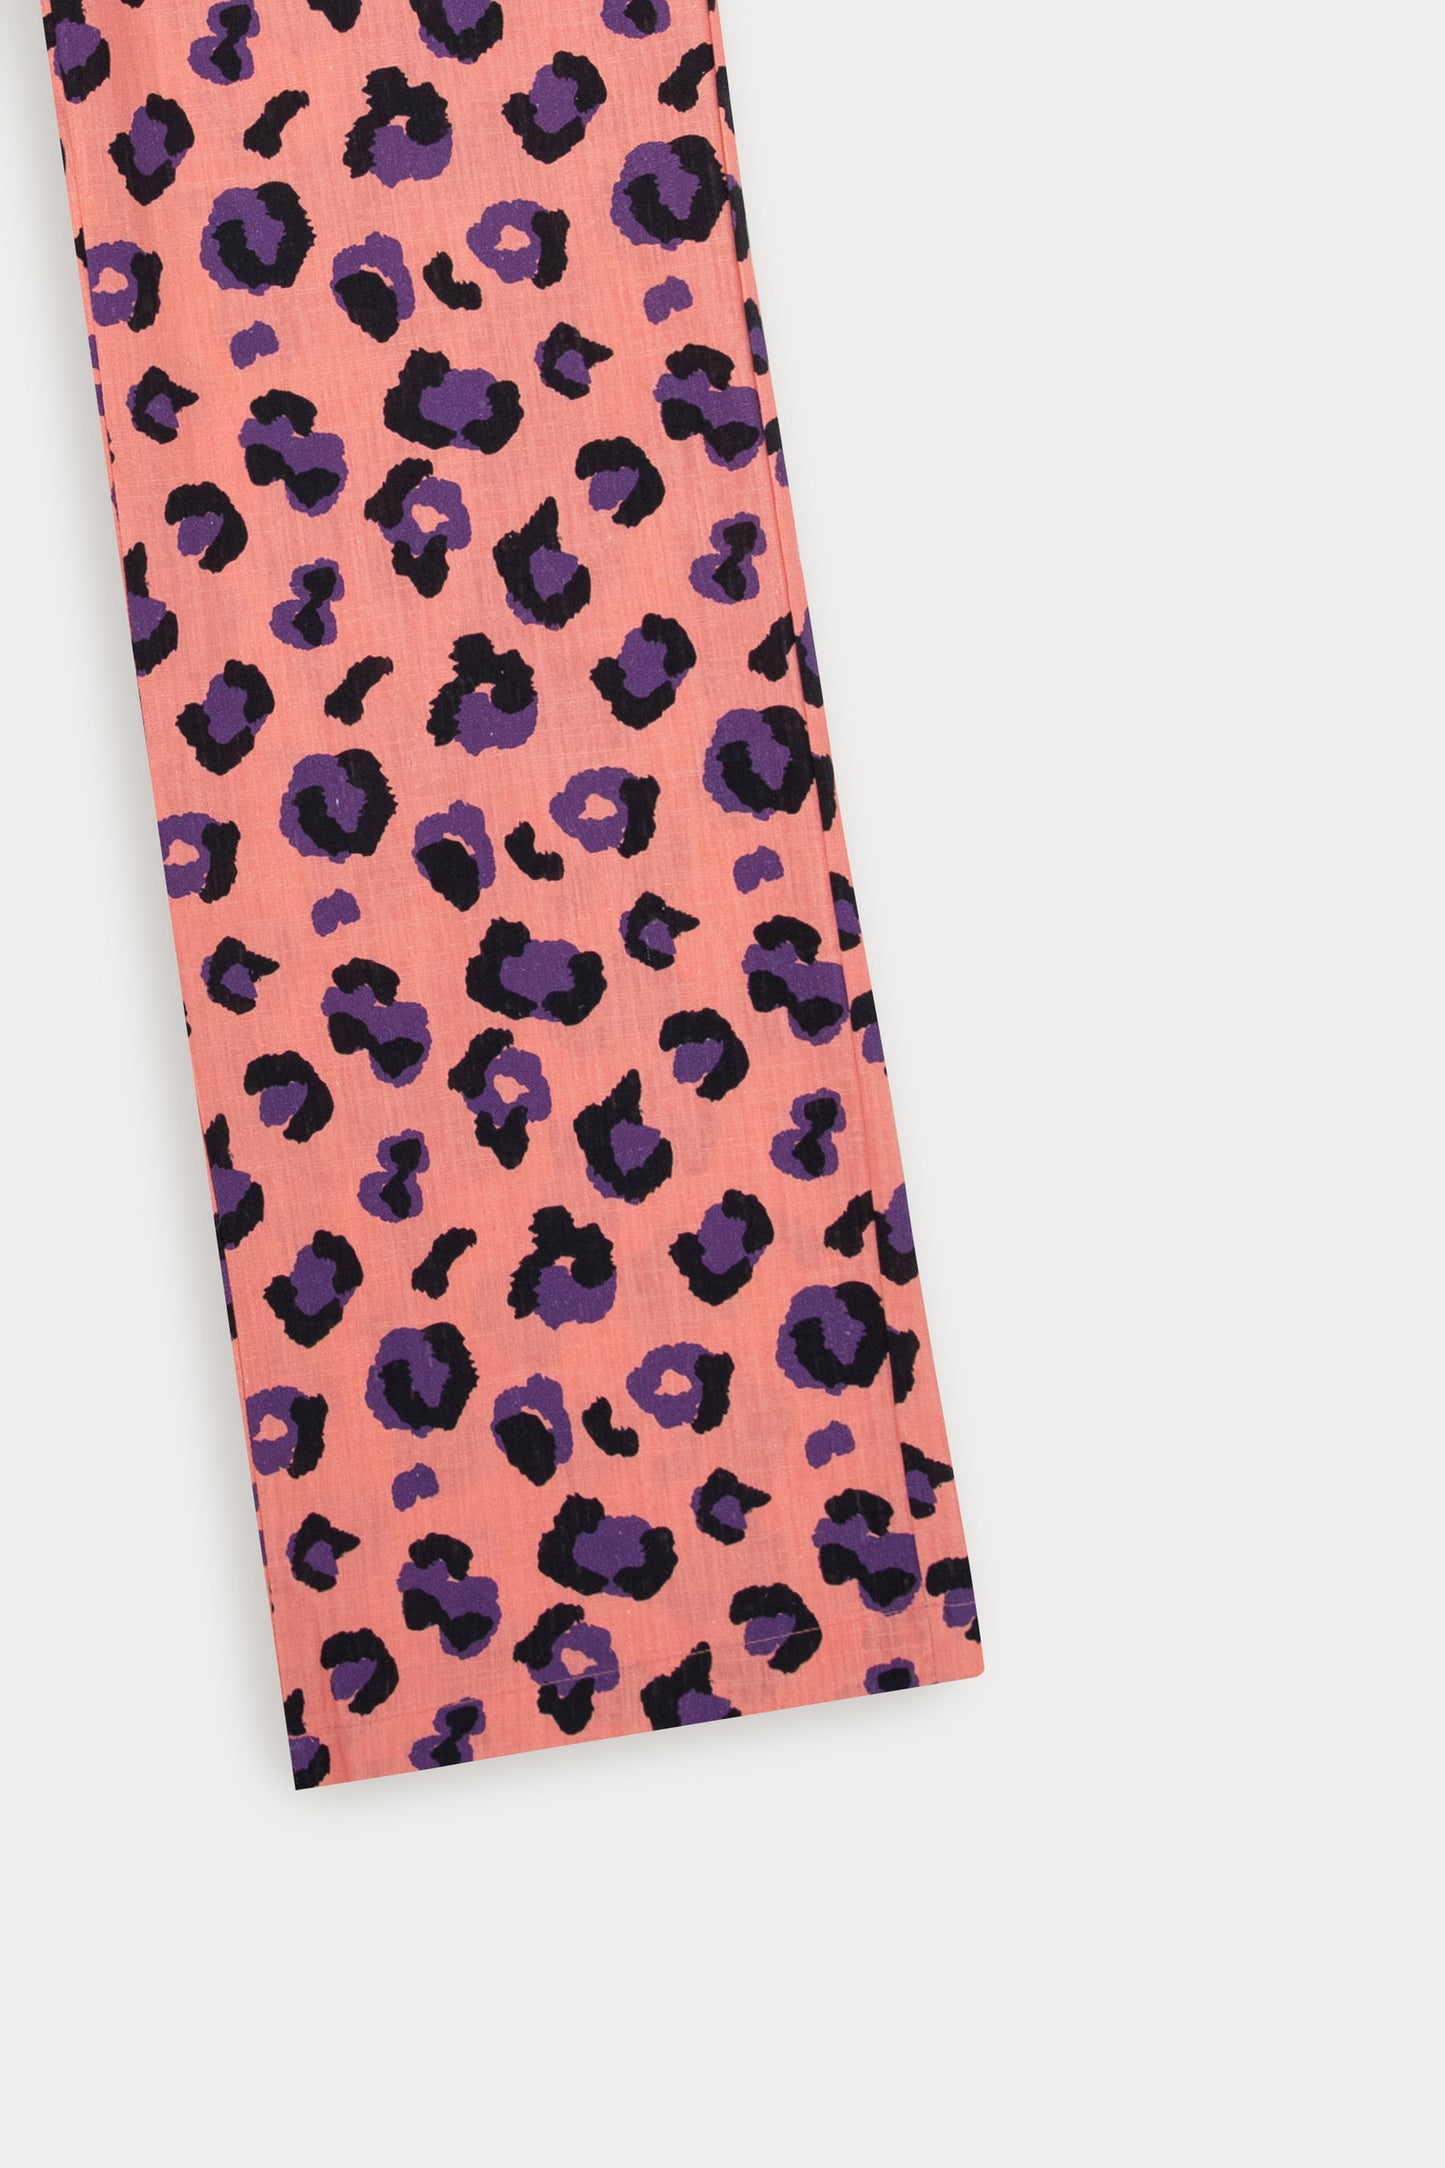 Leopard Print Thumb Tacks, Set of 10, Animal Print Push Pins, Fabric Button  Corkboard Tack Set, Leopard Print Home Decor, Black and Tan 